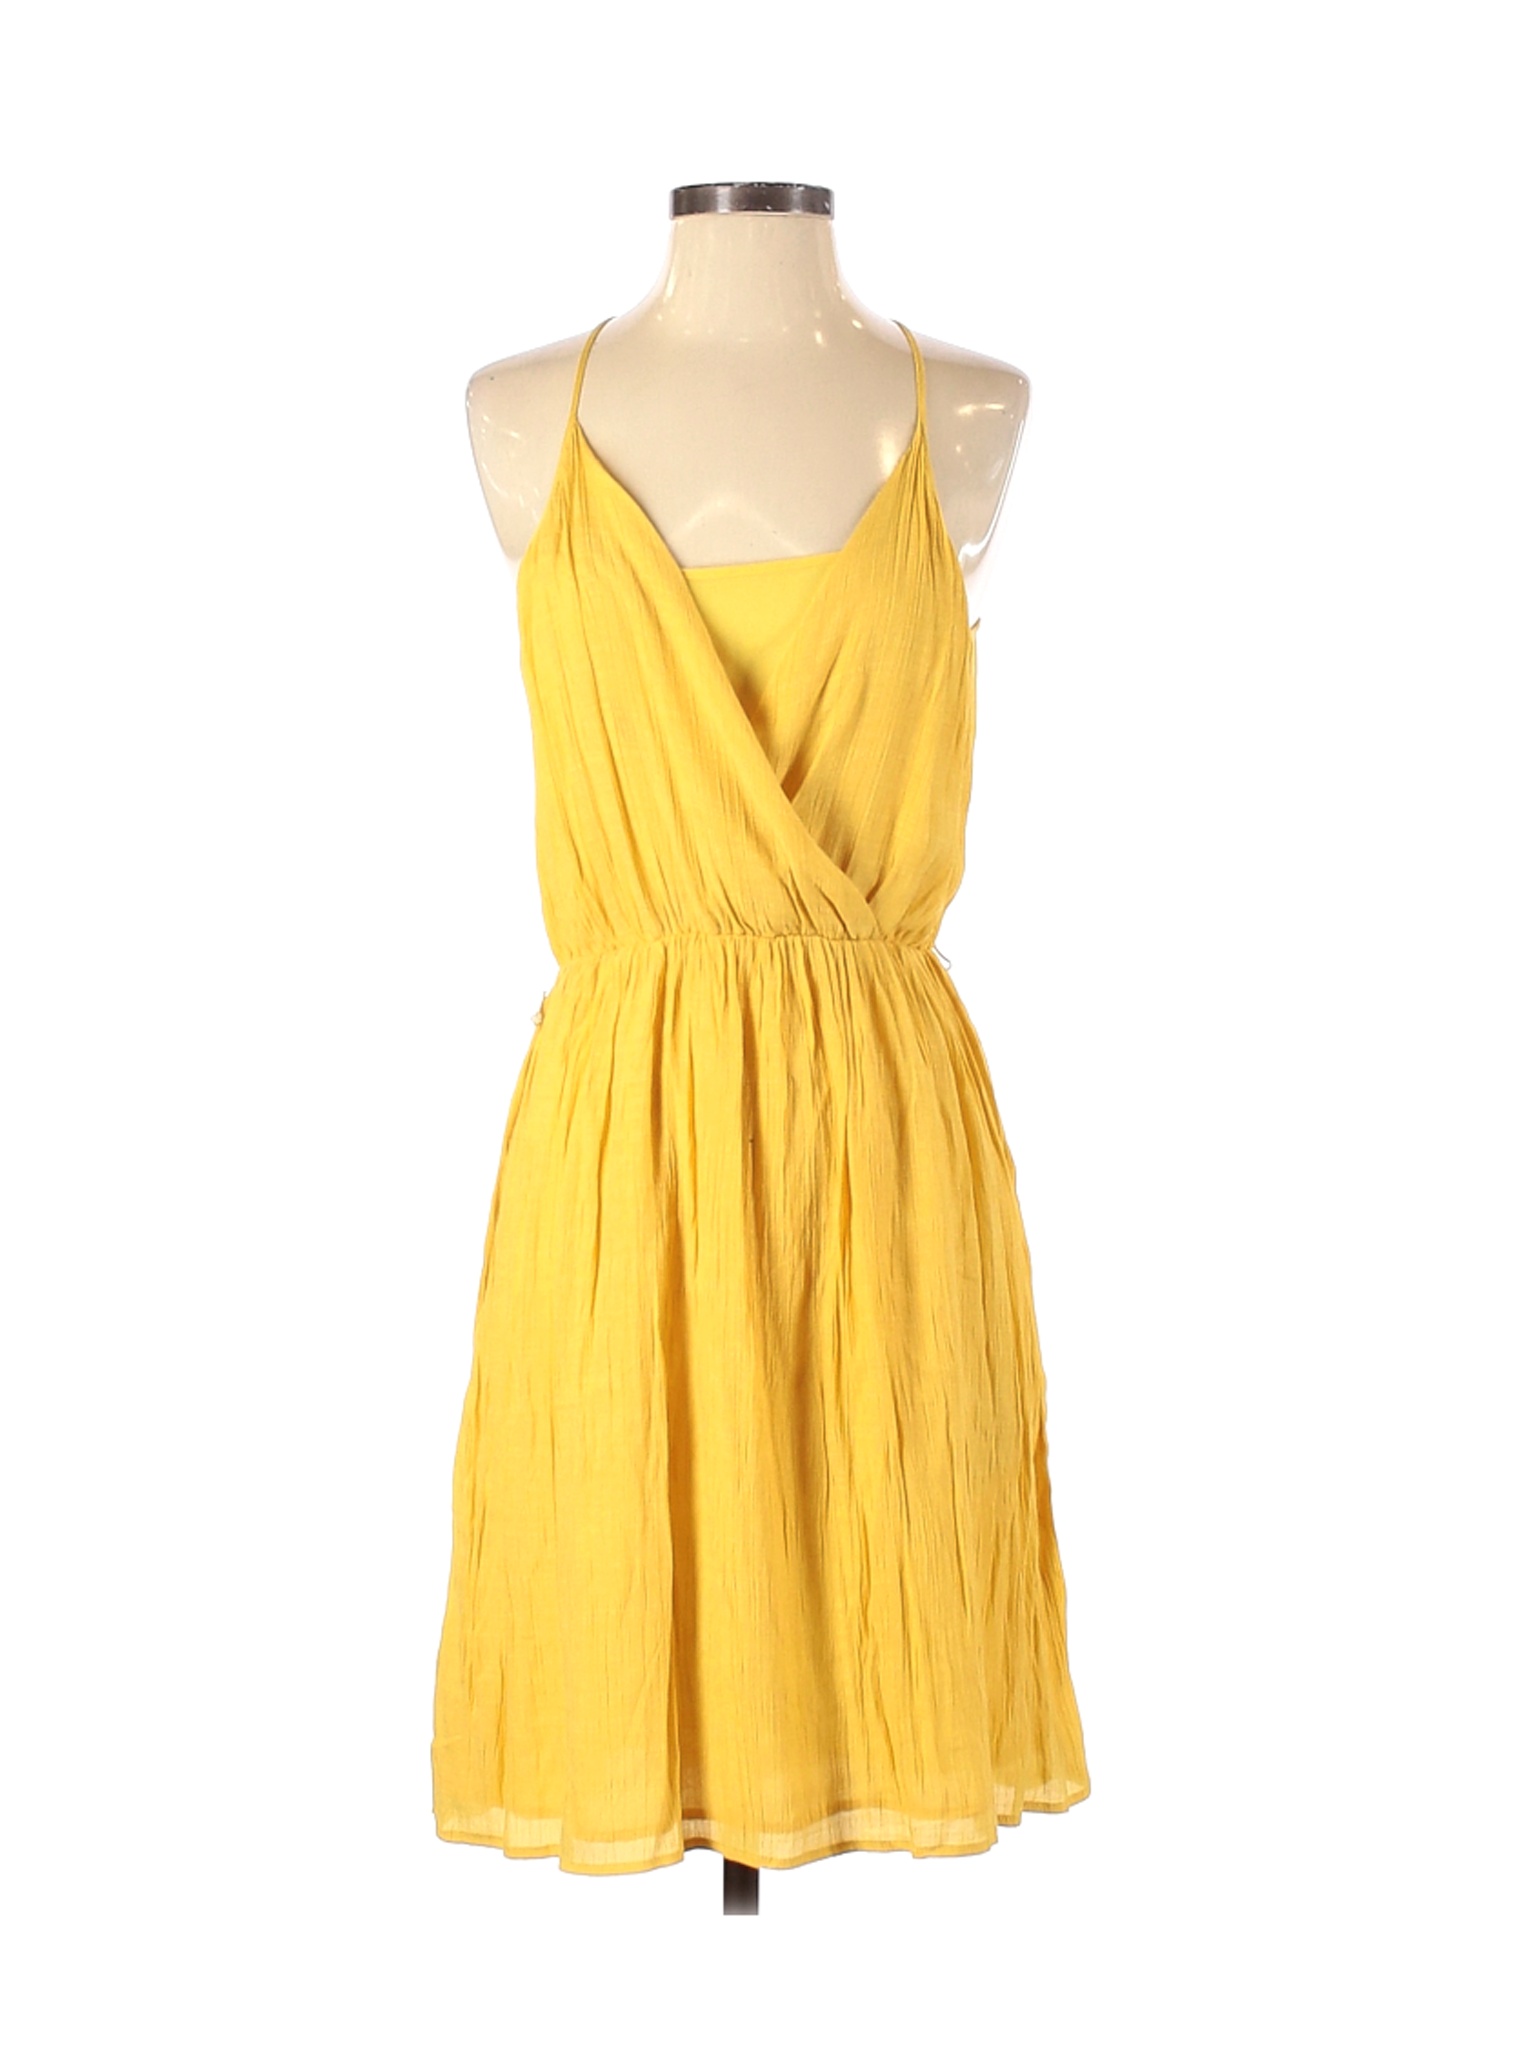 Mango Women Yellow Casual Dress XS | eBay